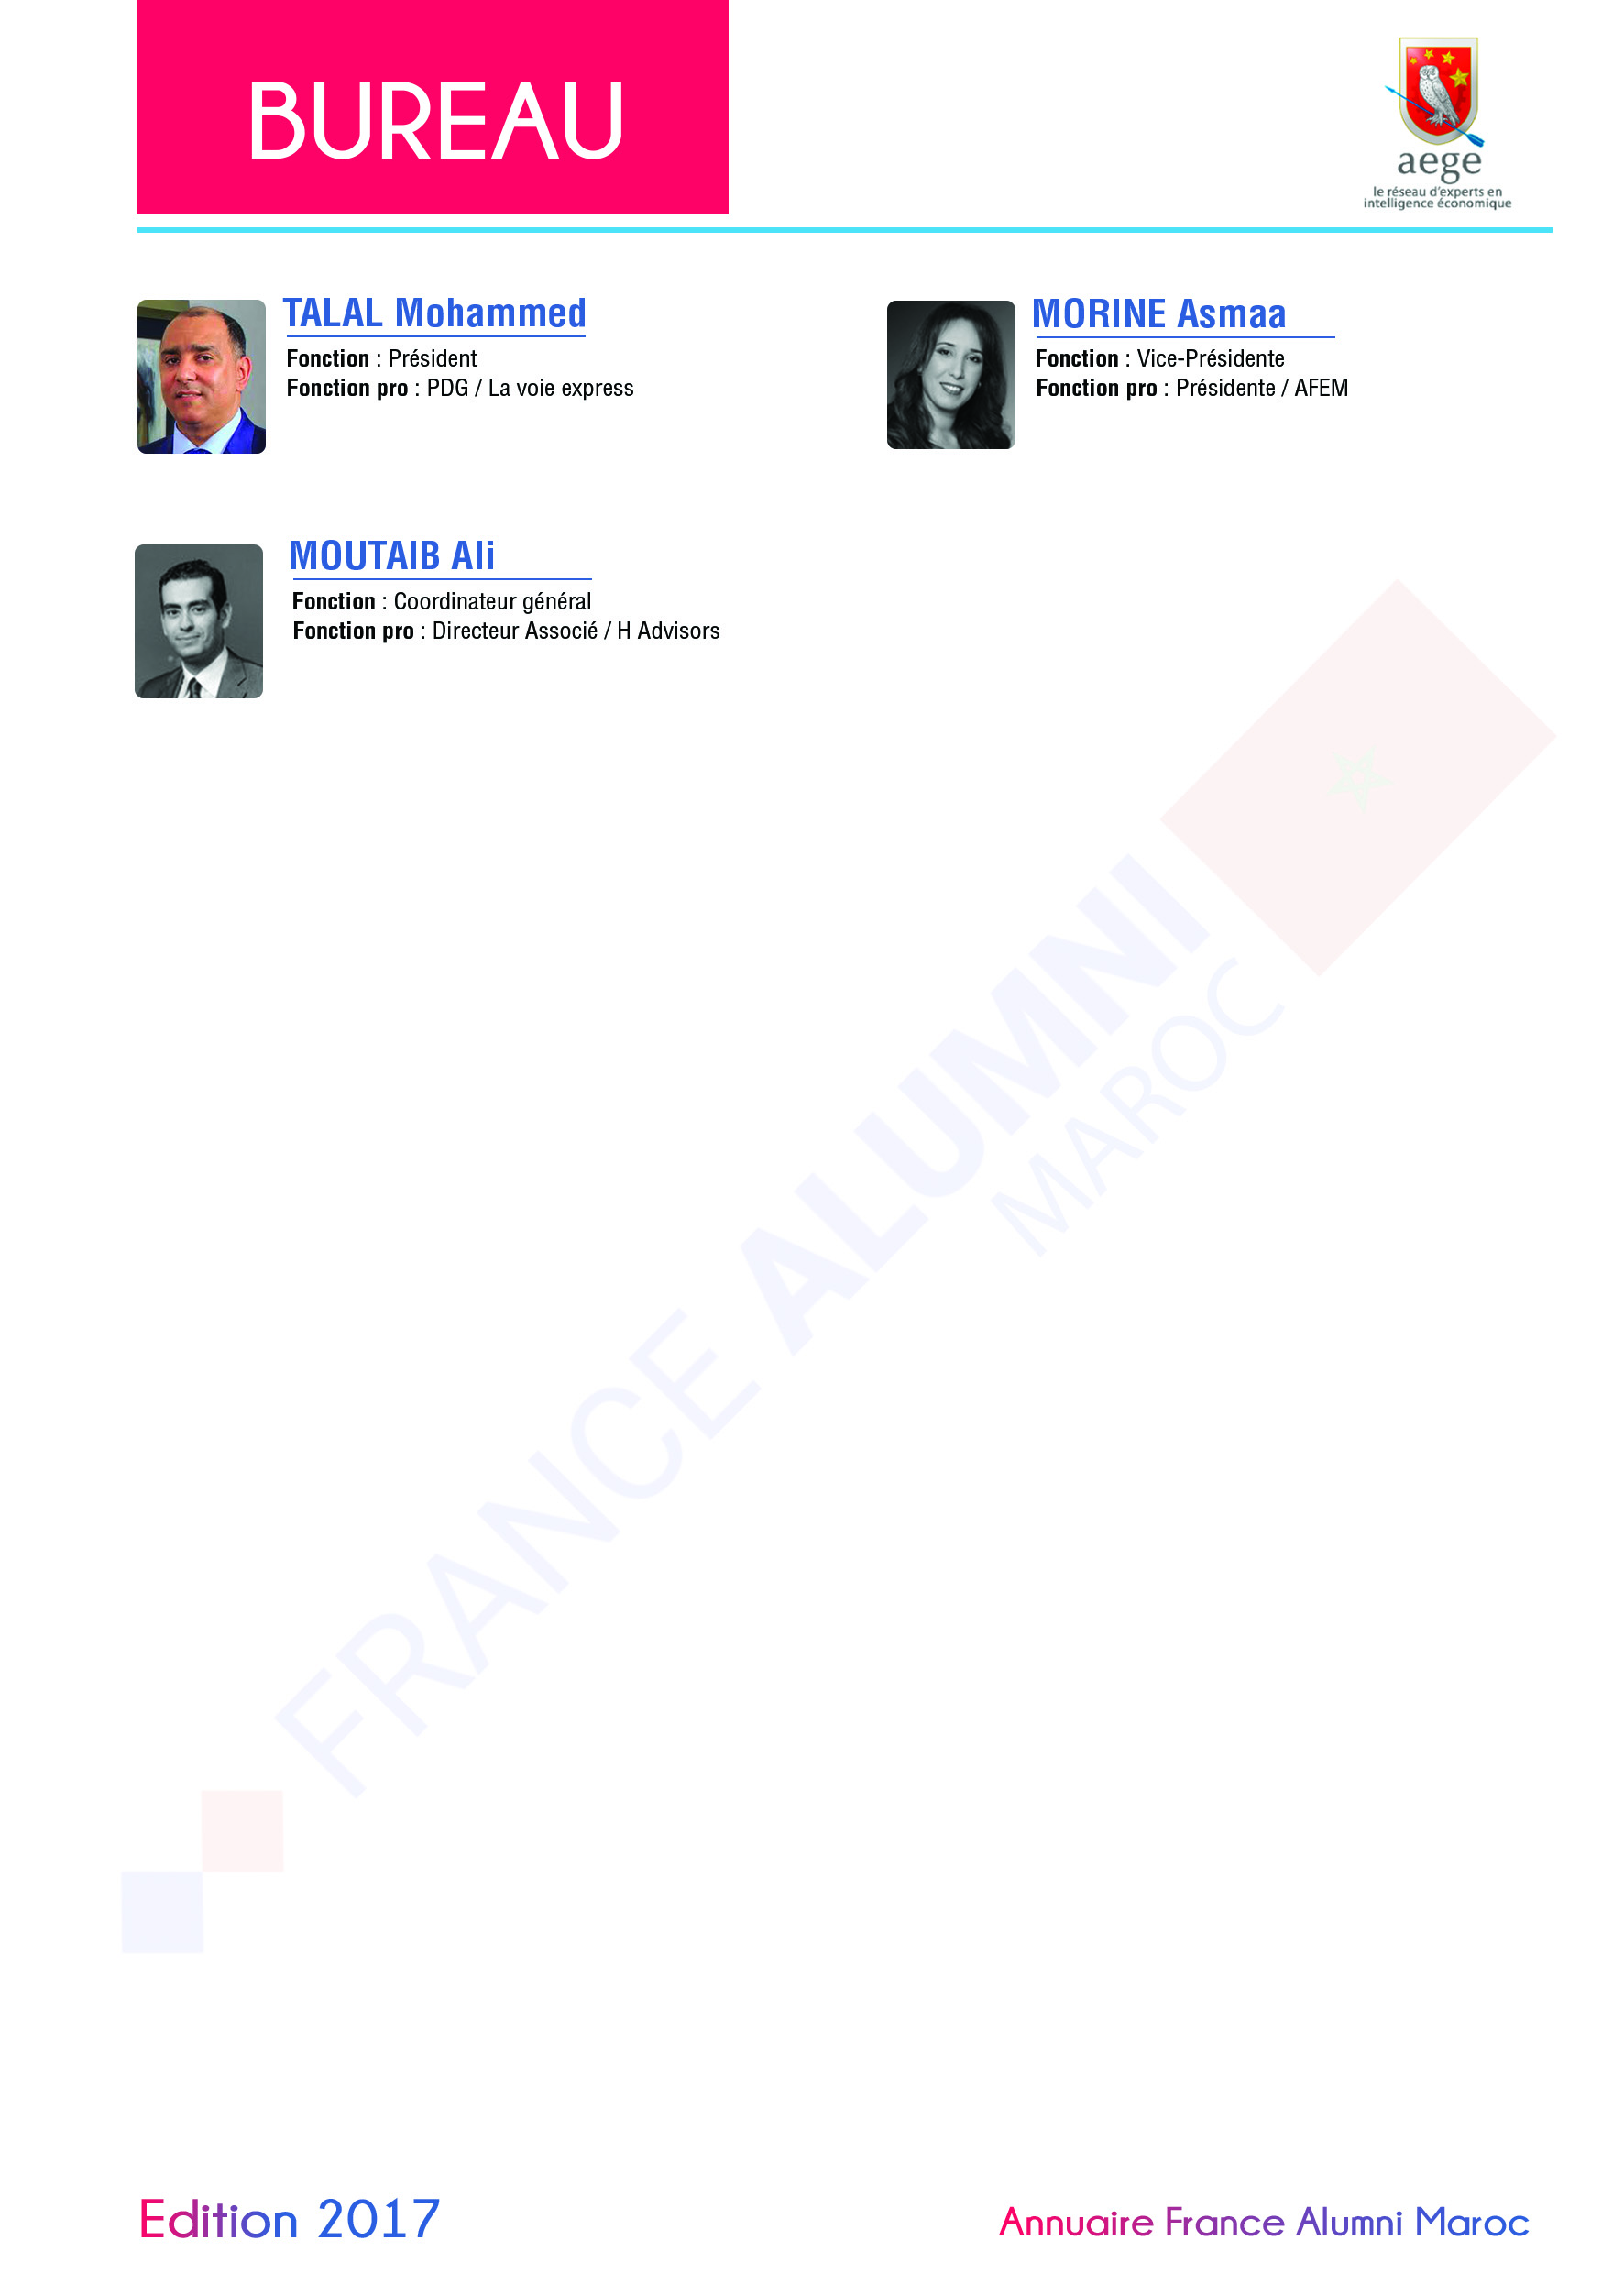 1512733985-ege-bureau-annuaire-france-alumni.jpg